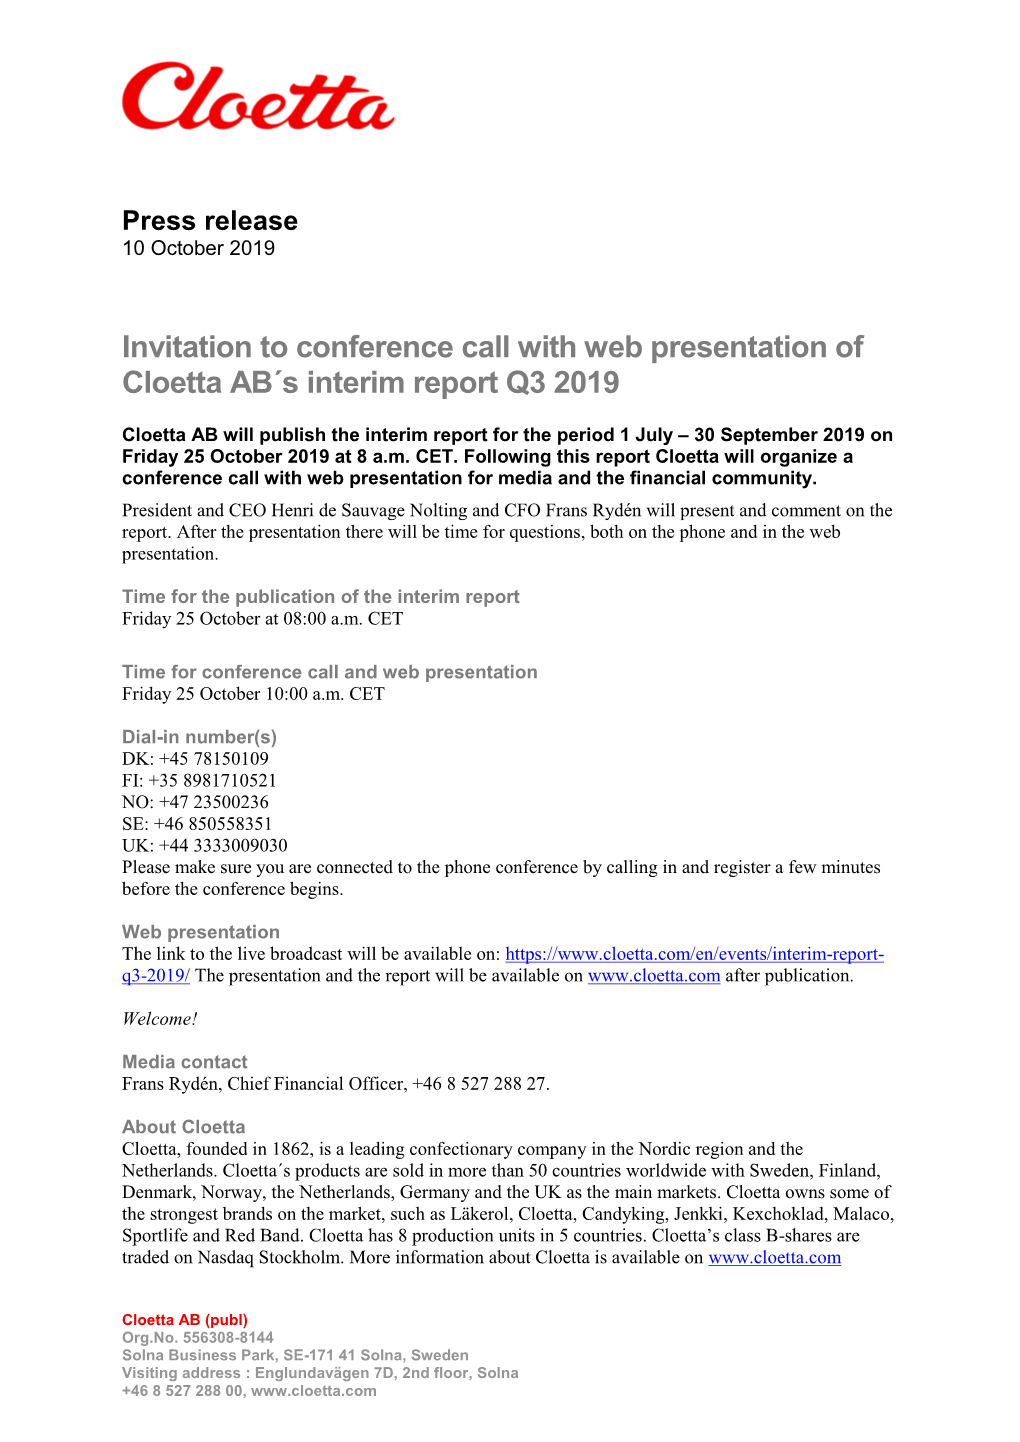 Invitation to Conference Call with Web Presentation of Cloetta AB´S Interim Report Q3 2019